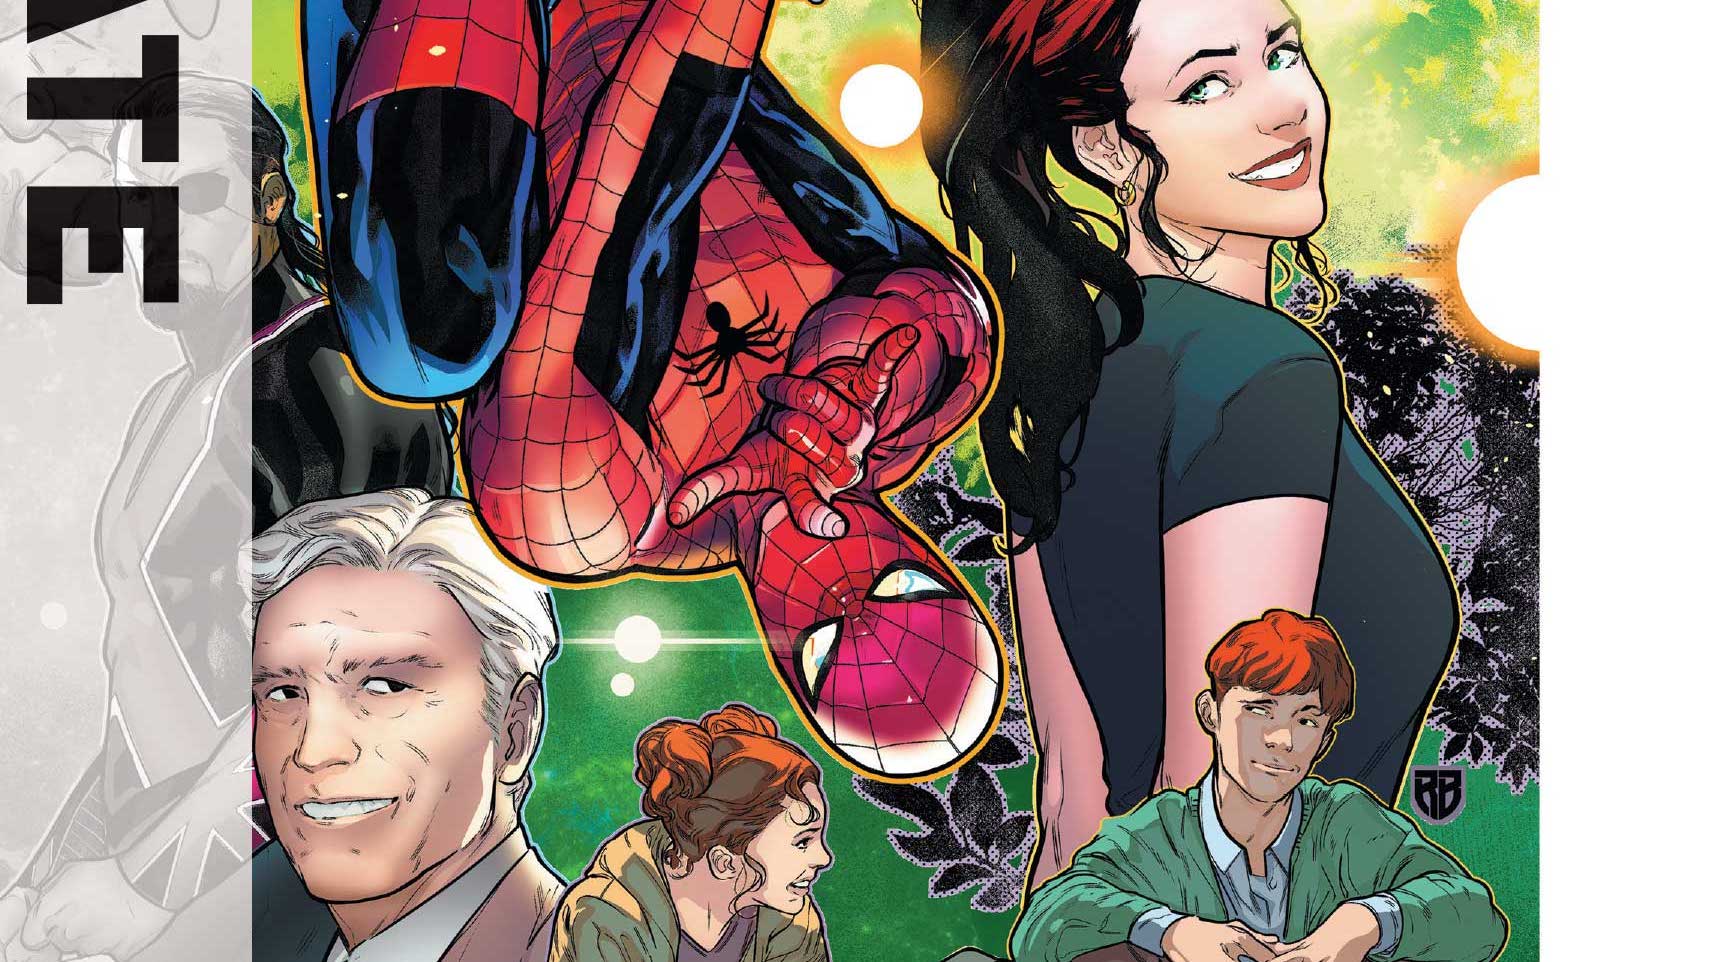 Marvel released 'Ultimate Spider-Man' #4 cover art and teaser